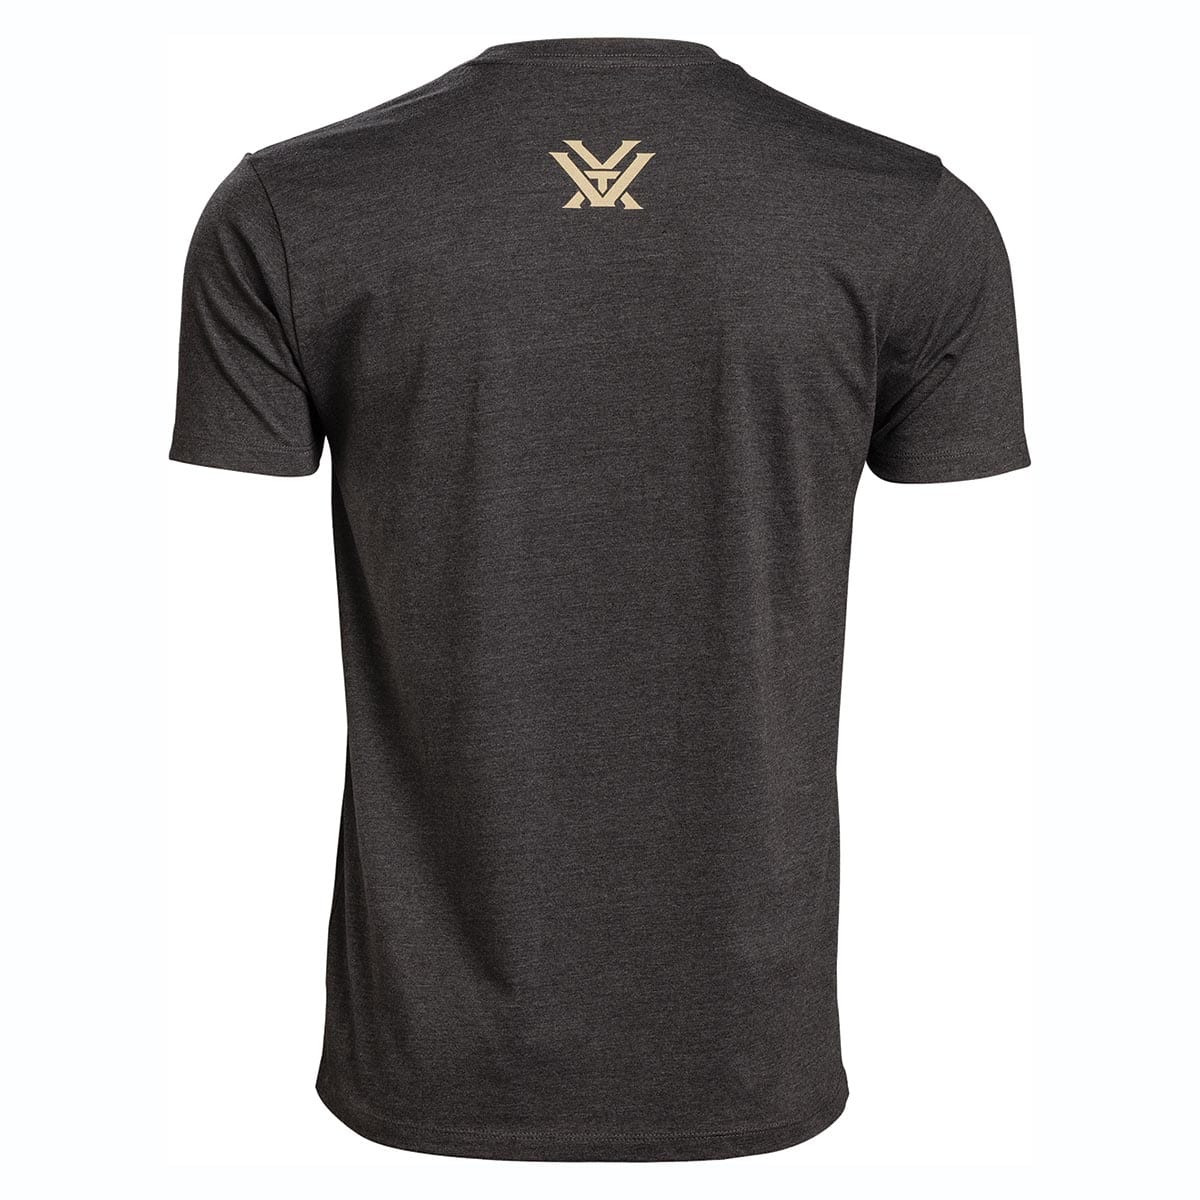 Vortex Optics Full-Tine Short Sleeve T-Shirt